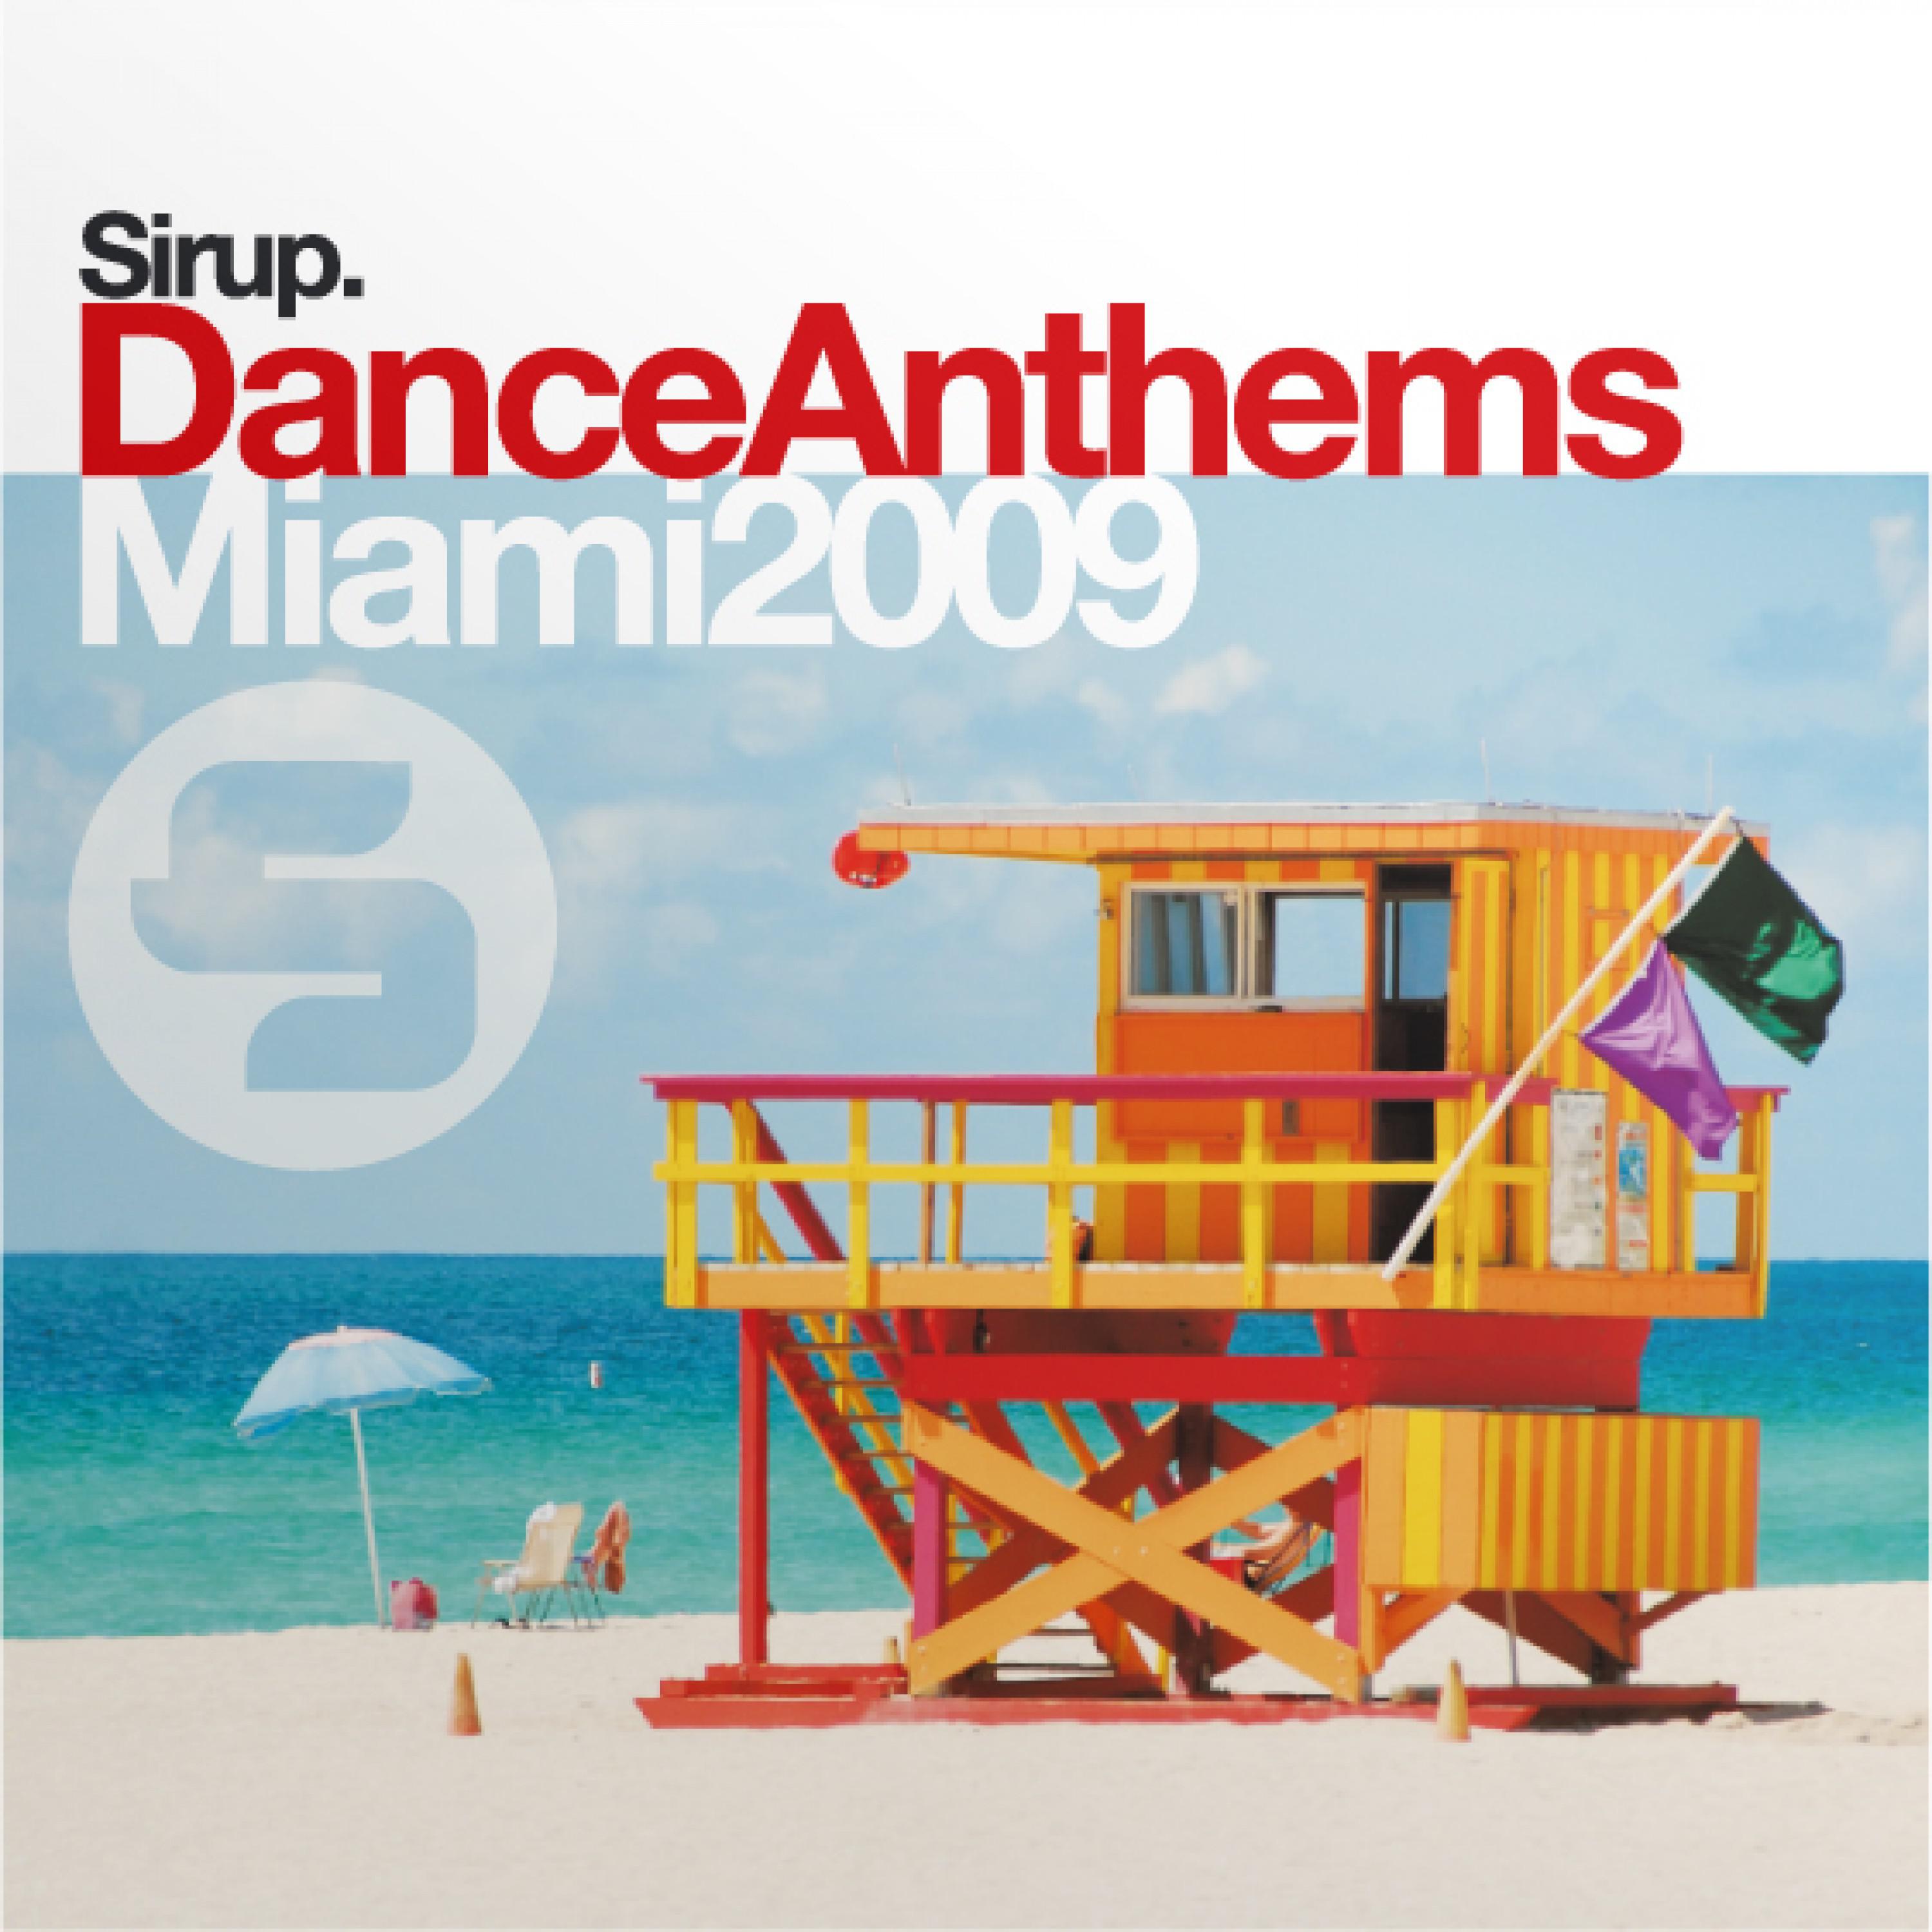 Sirup Dance Anthems Miami 2009